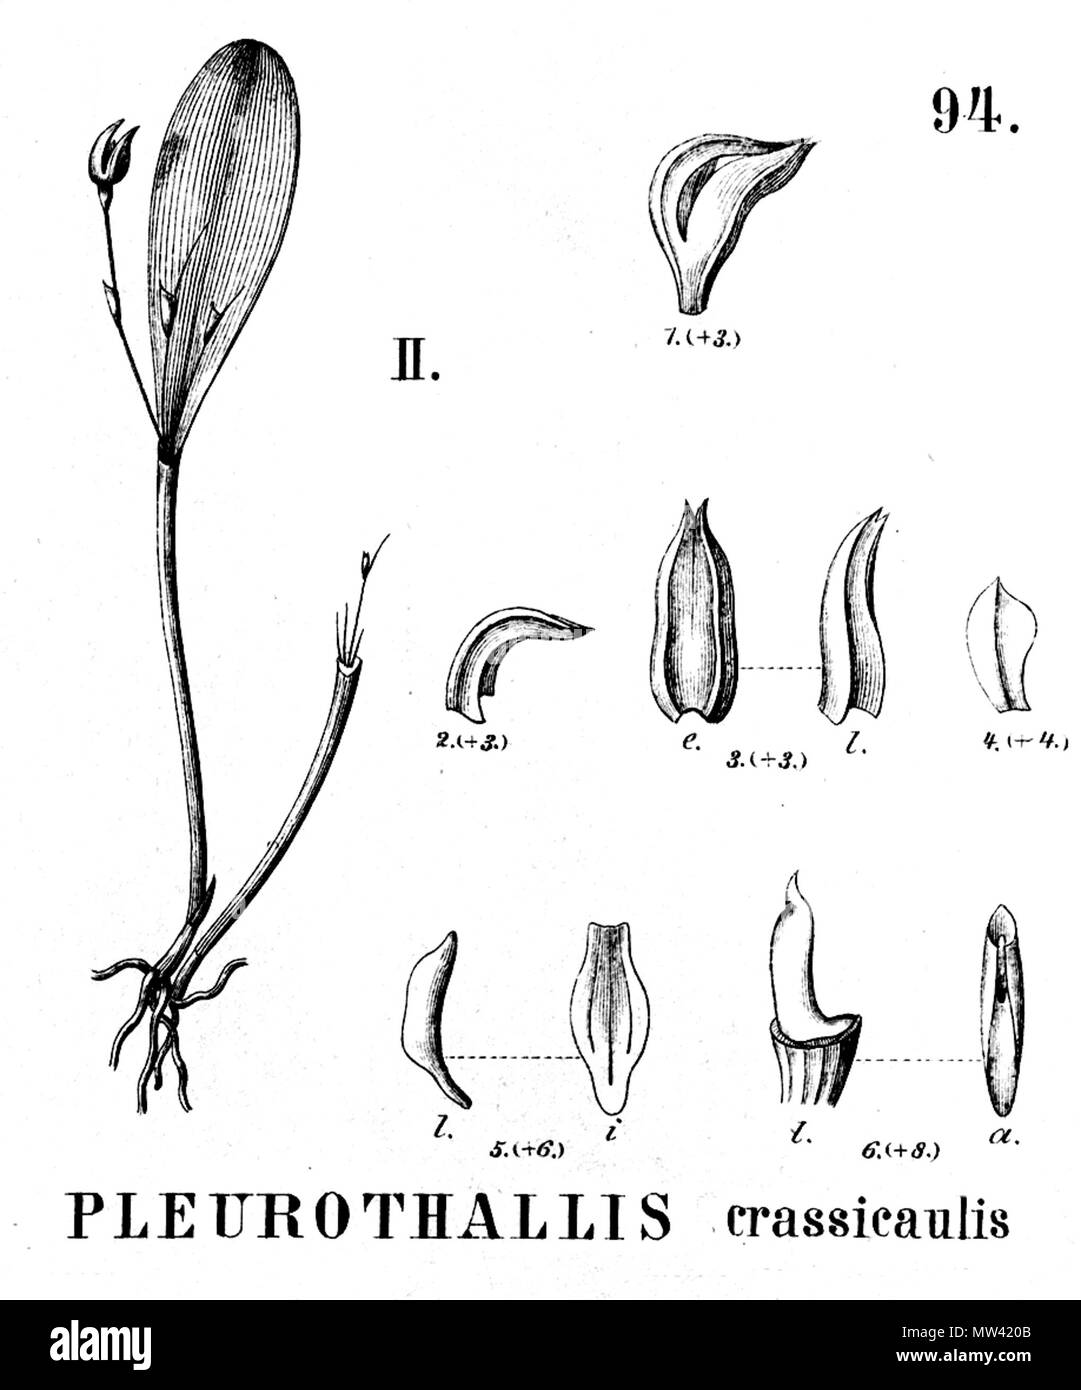 . Illustration of Pleurothallis crassicaulis . 1896. Alfred Cogniaux (1841 - 1916) 489 Pleurothallis crassicaulis - cutout from Flora Brasiliensis 3-4-94 fig II Stock Photo